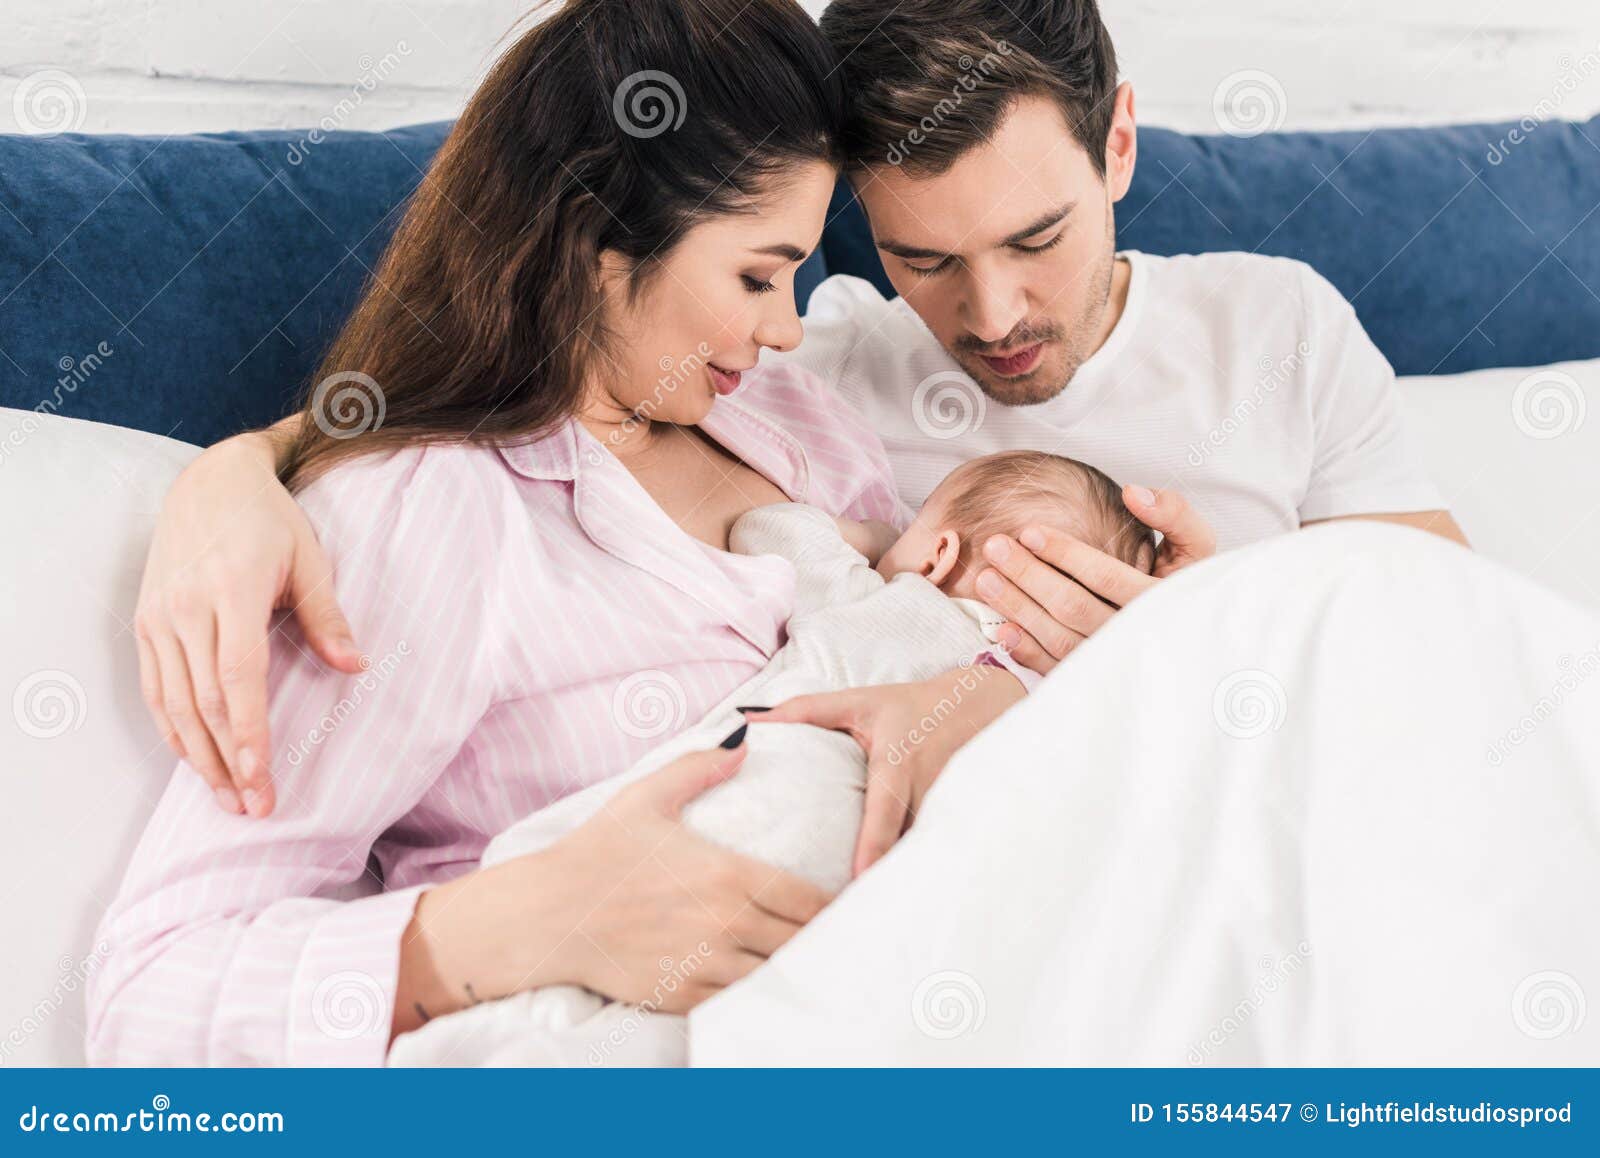 Woman Breastfeeding Husband Stock Photos pic